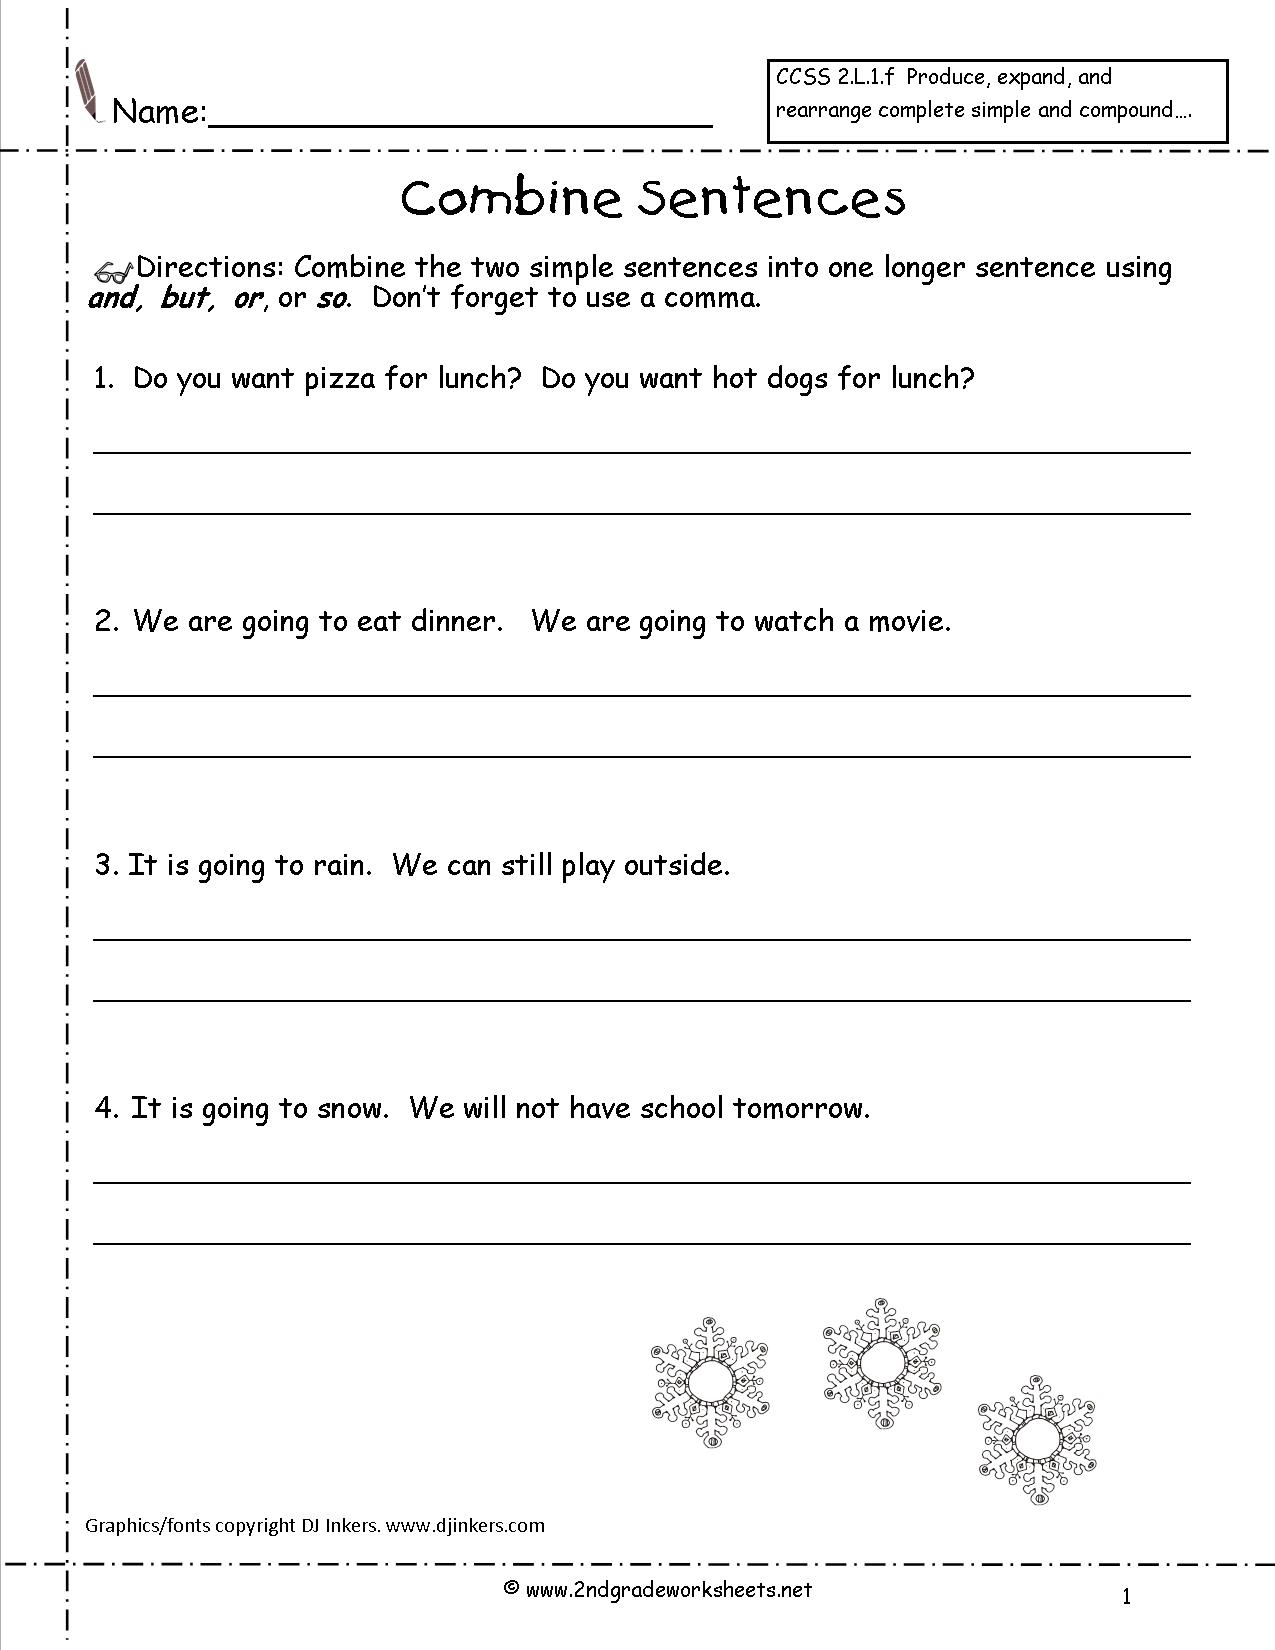 Combining Sentences Worksheets Second Grade Image